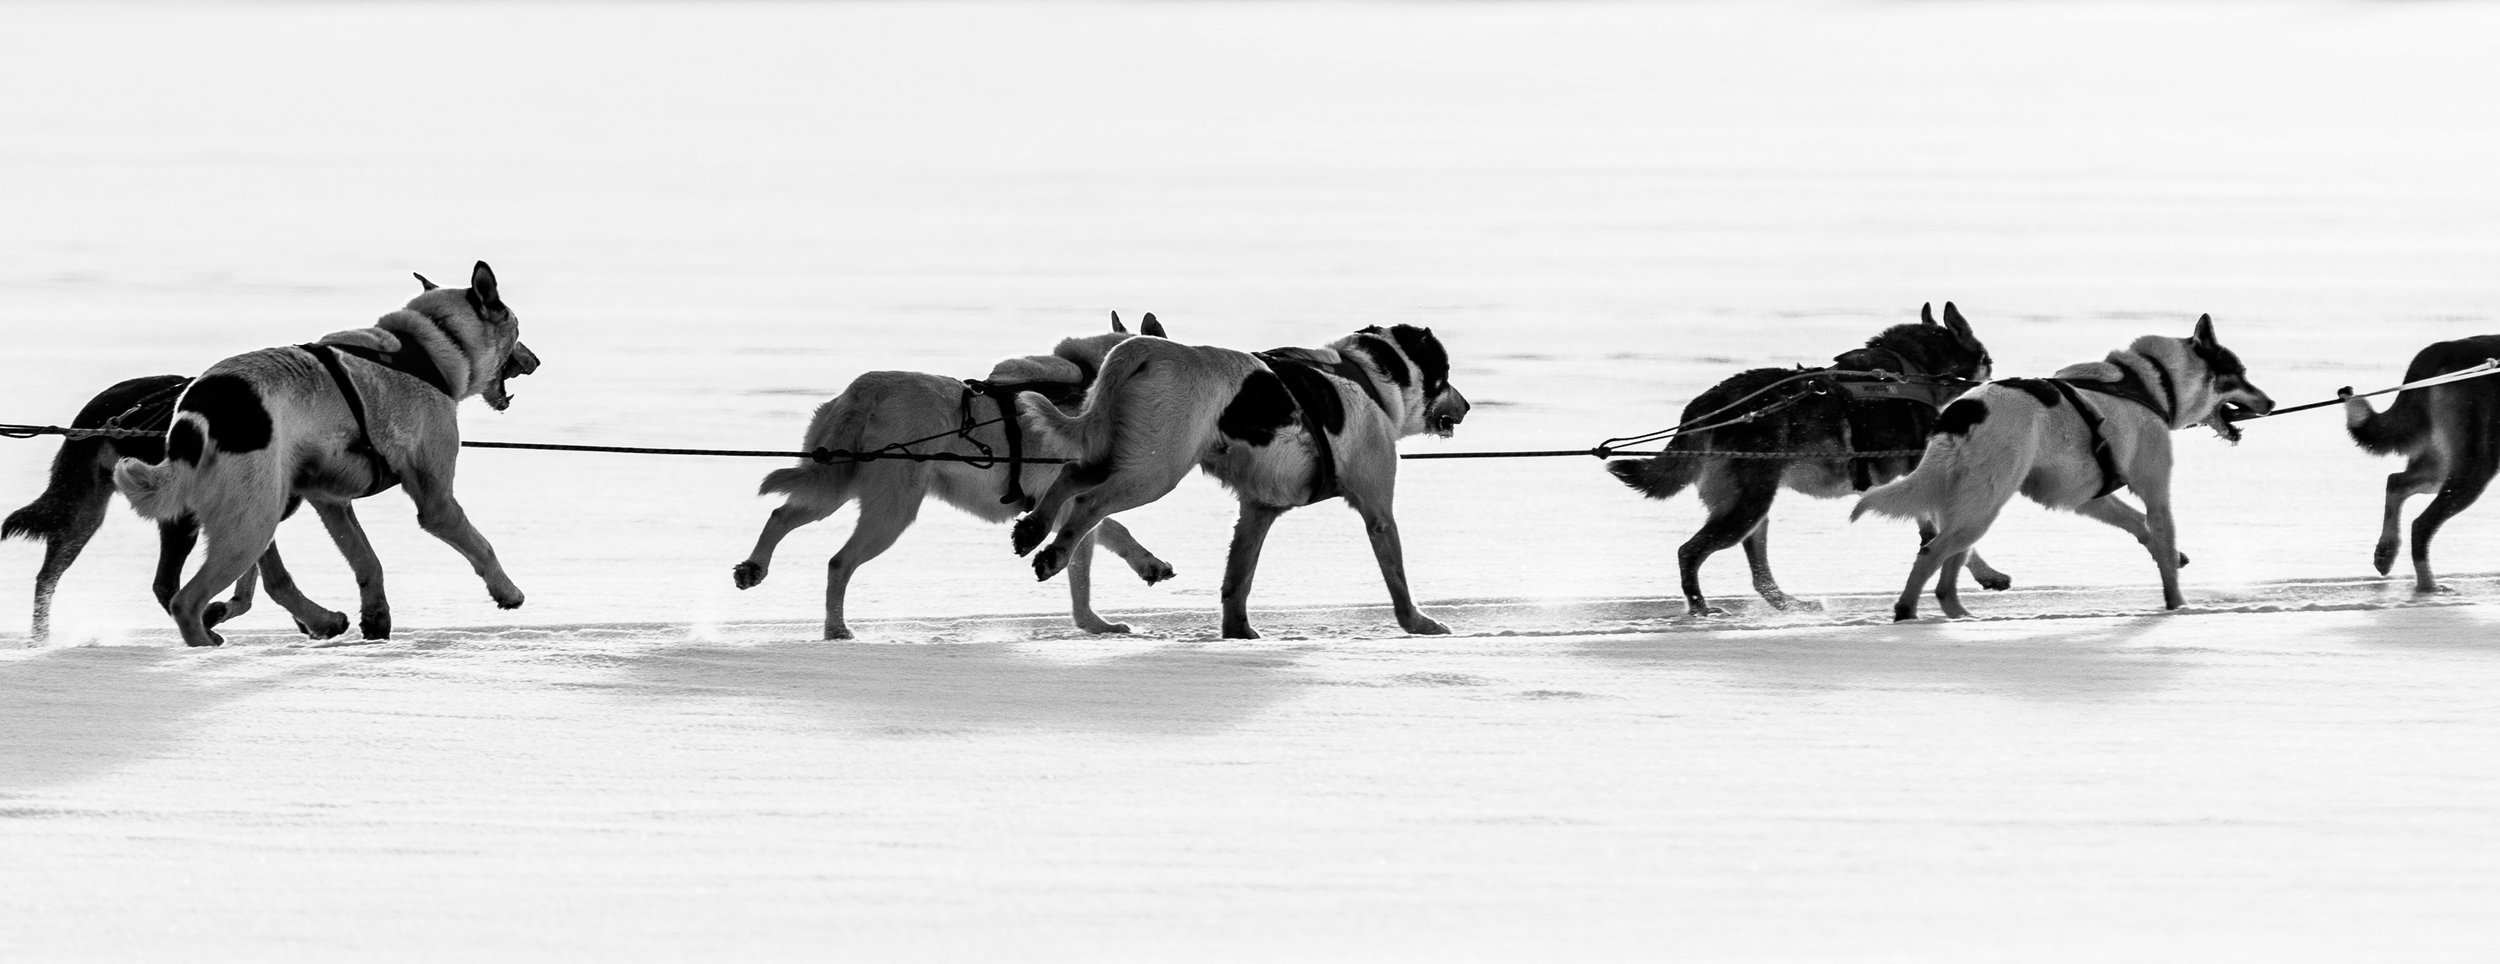 Dog Sledding Sweden Dog mushing Huskies 6.jpg